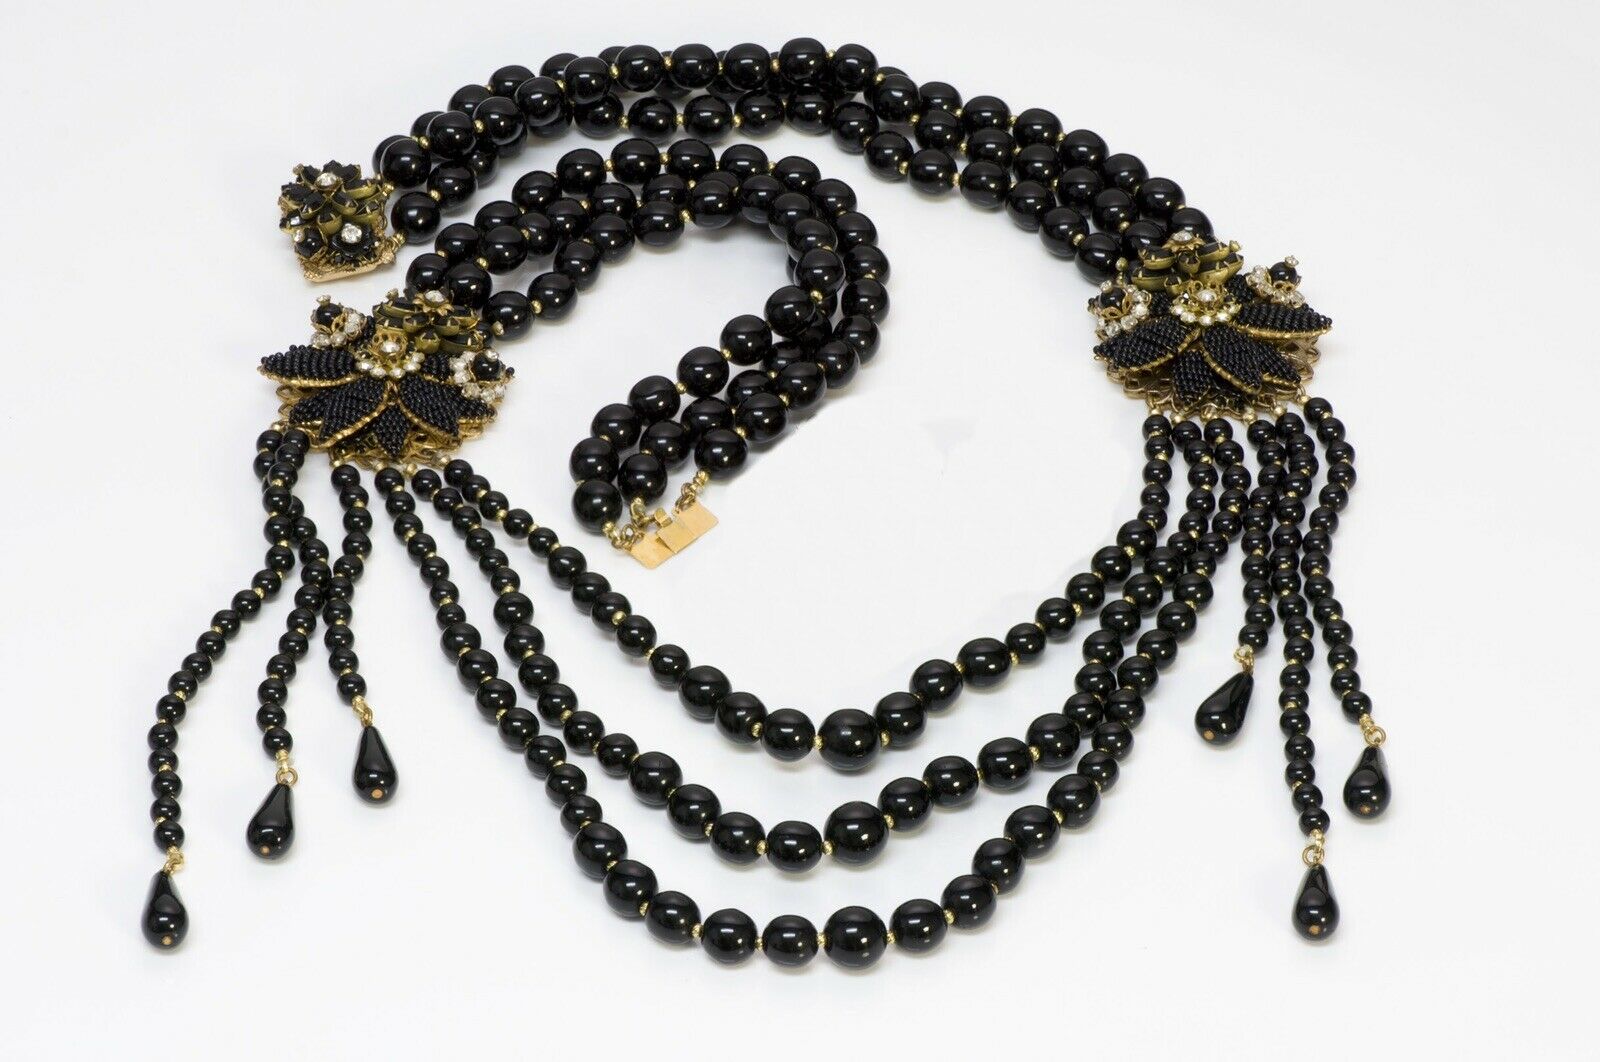 DeMario 1950’s 3 Strand Black Glass Beads Flower Tassel Necklace